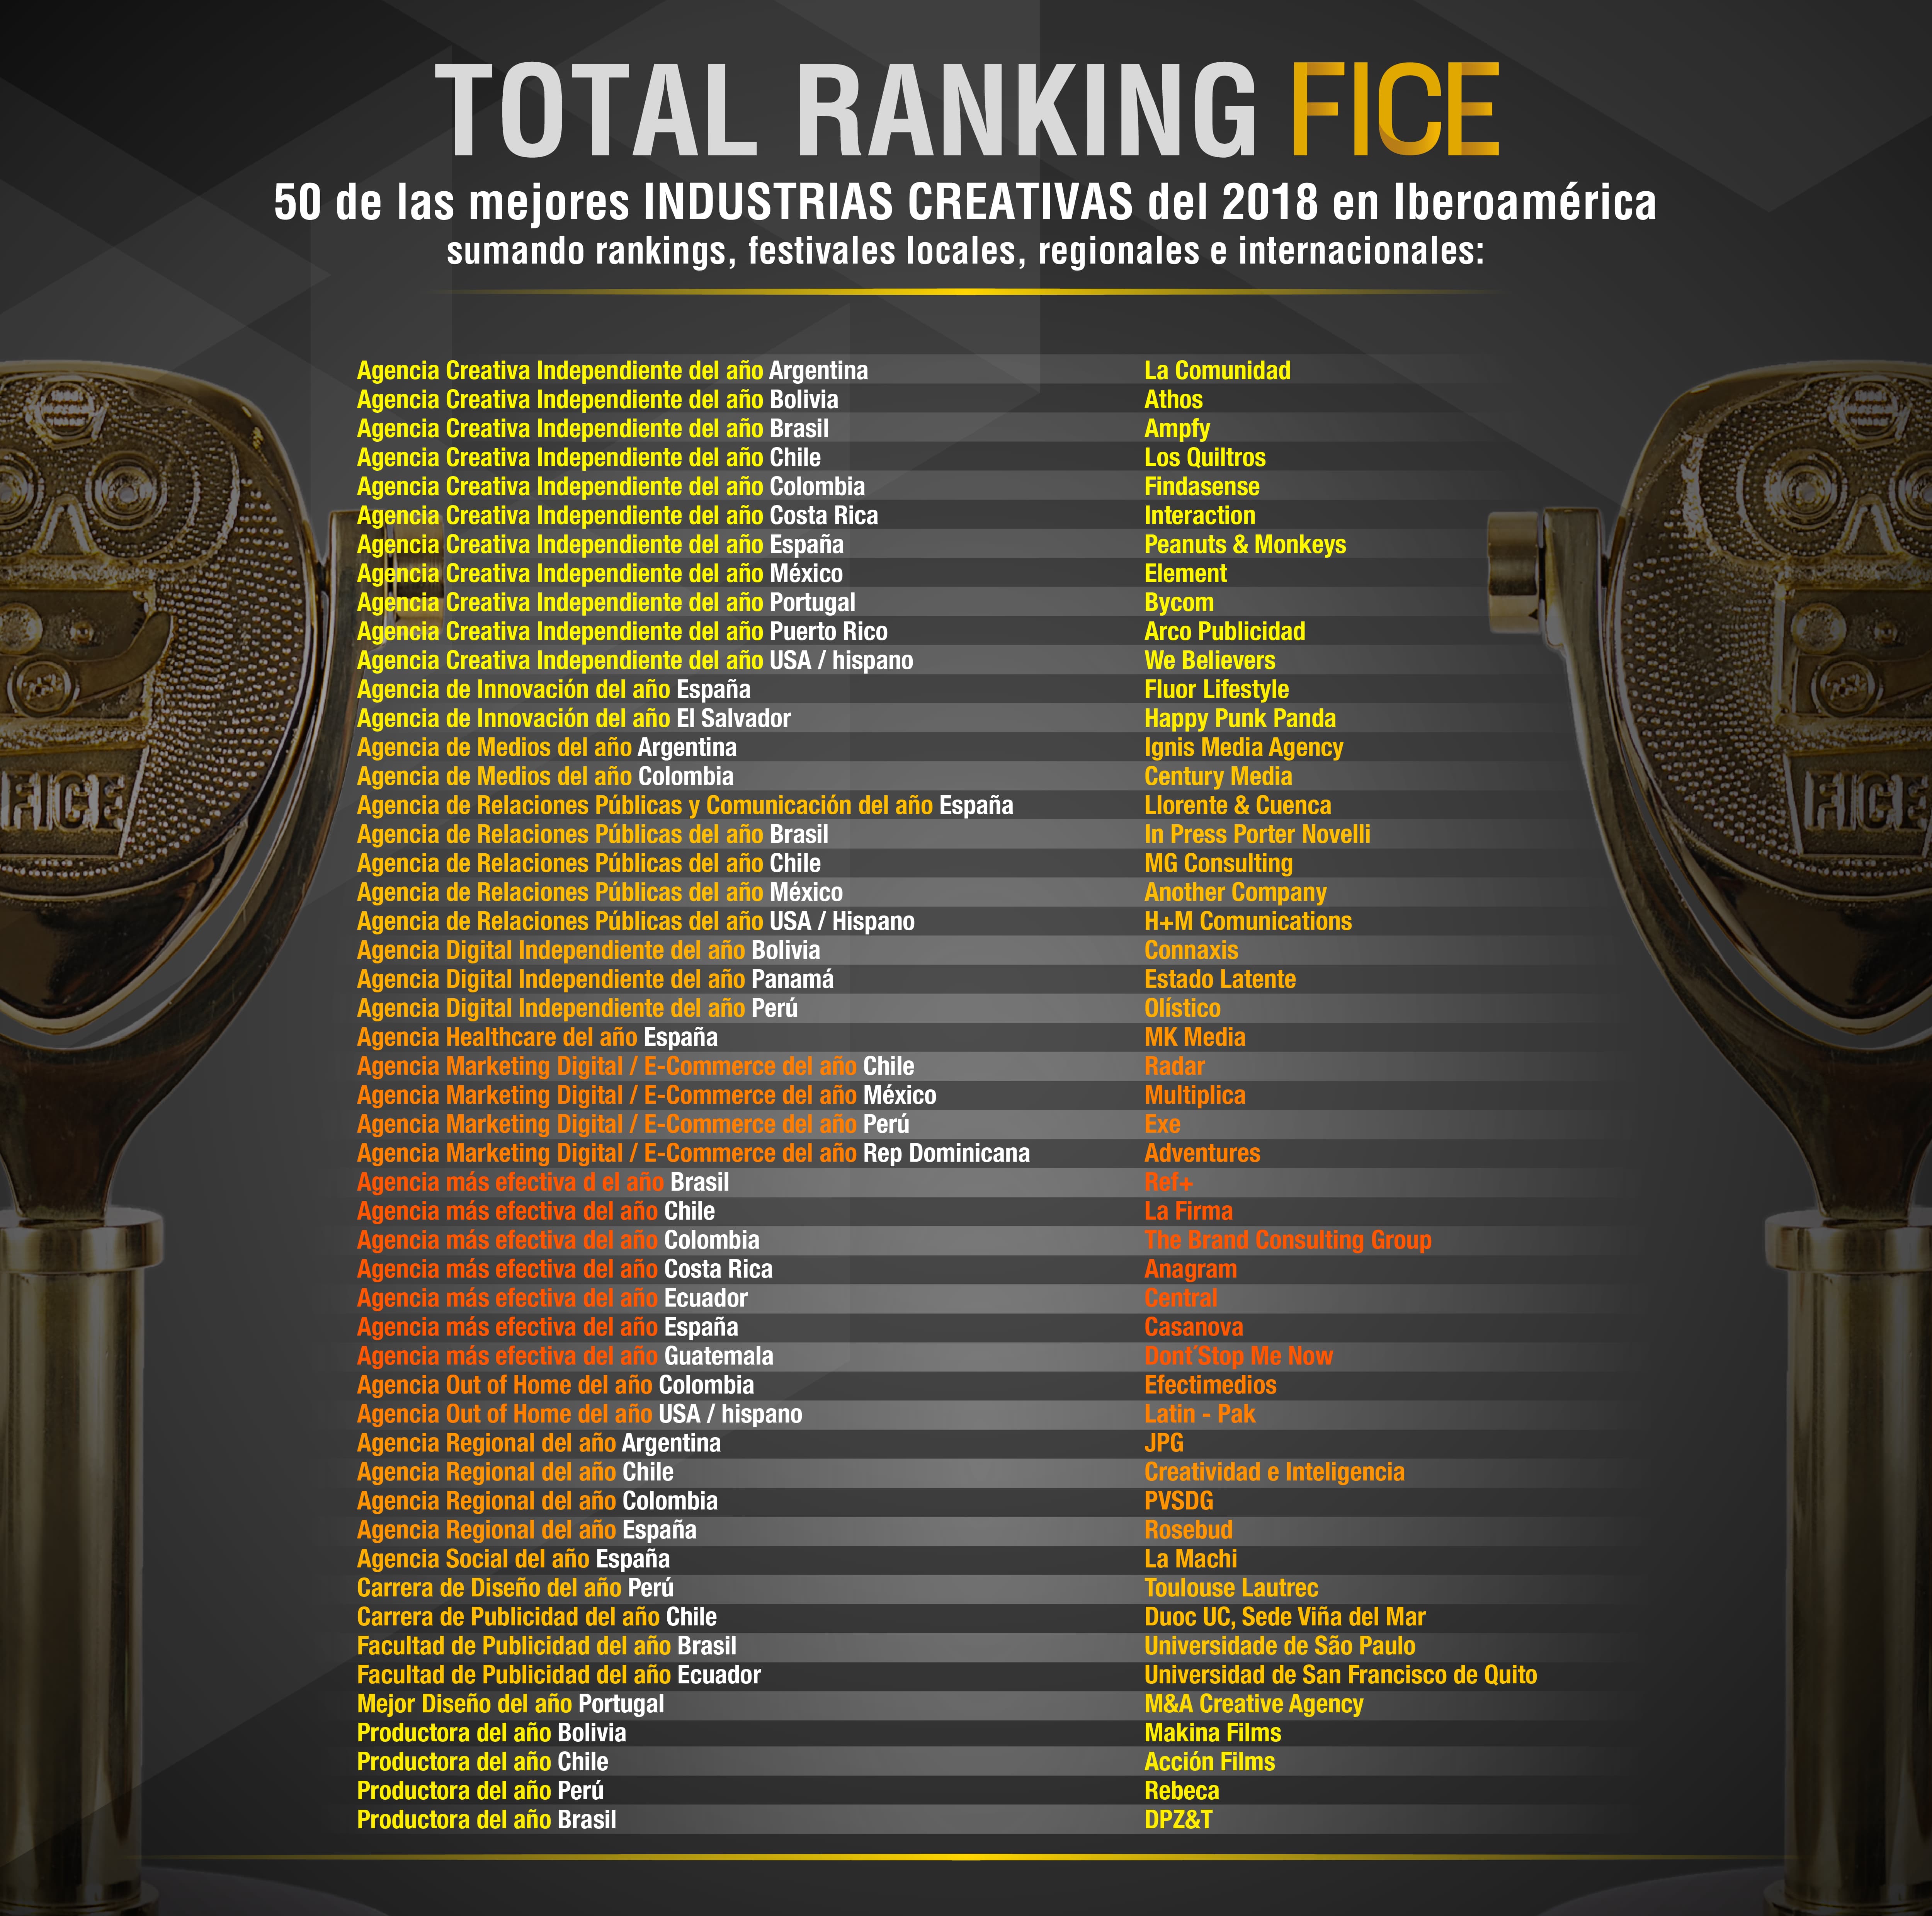 FICE ranking general - Top 50